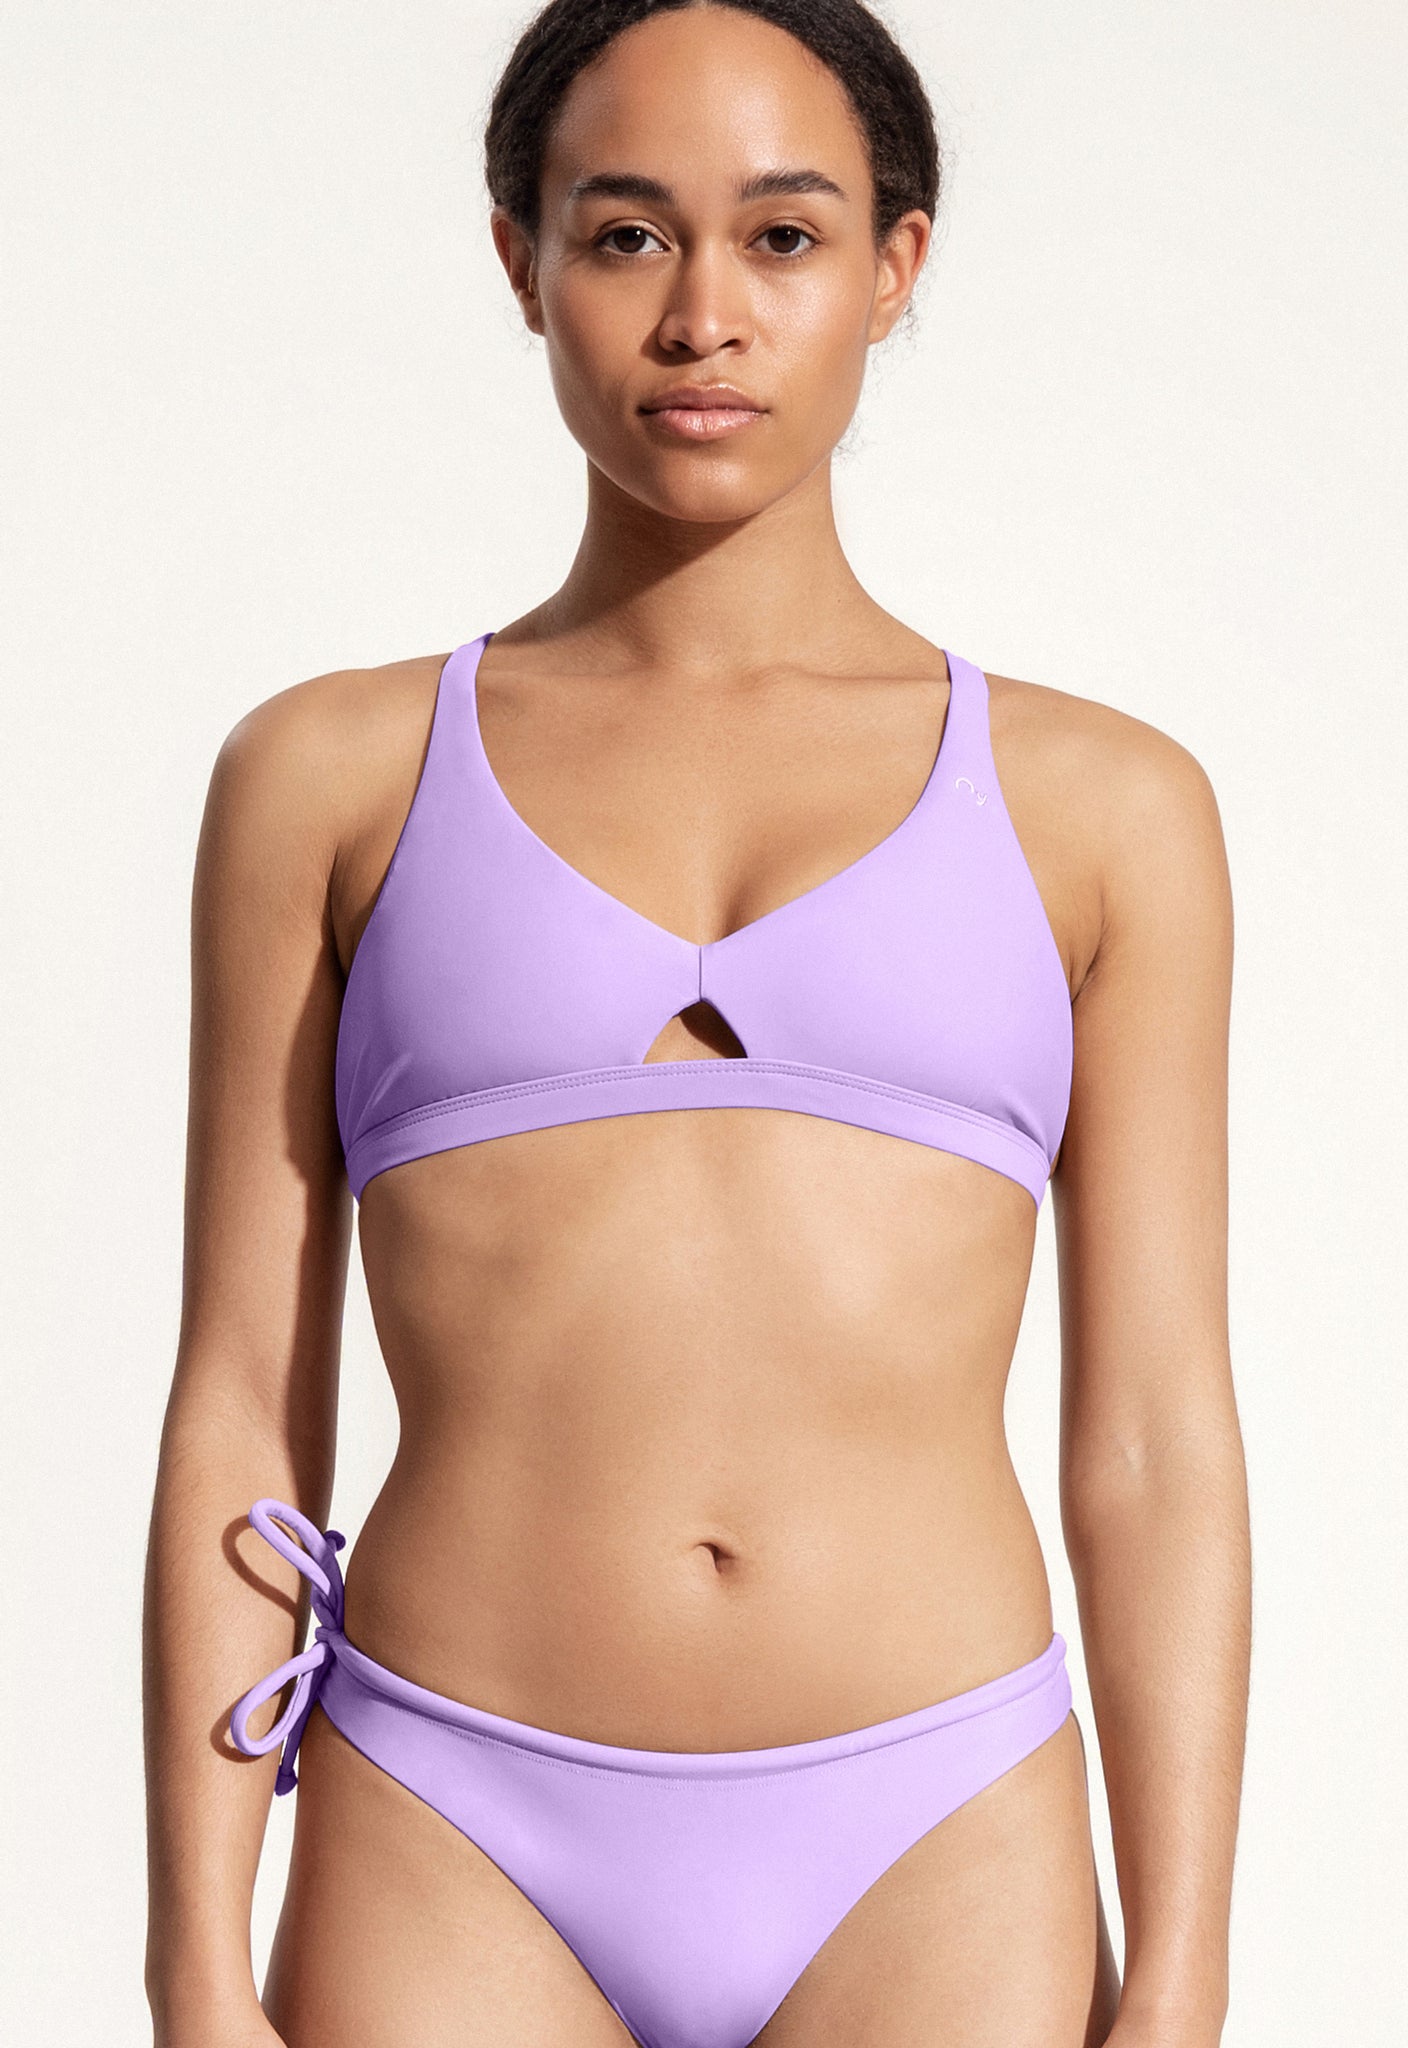 Surf Bikini Top "Coho" in light purple